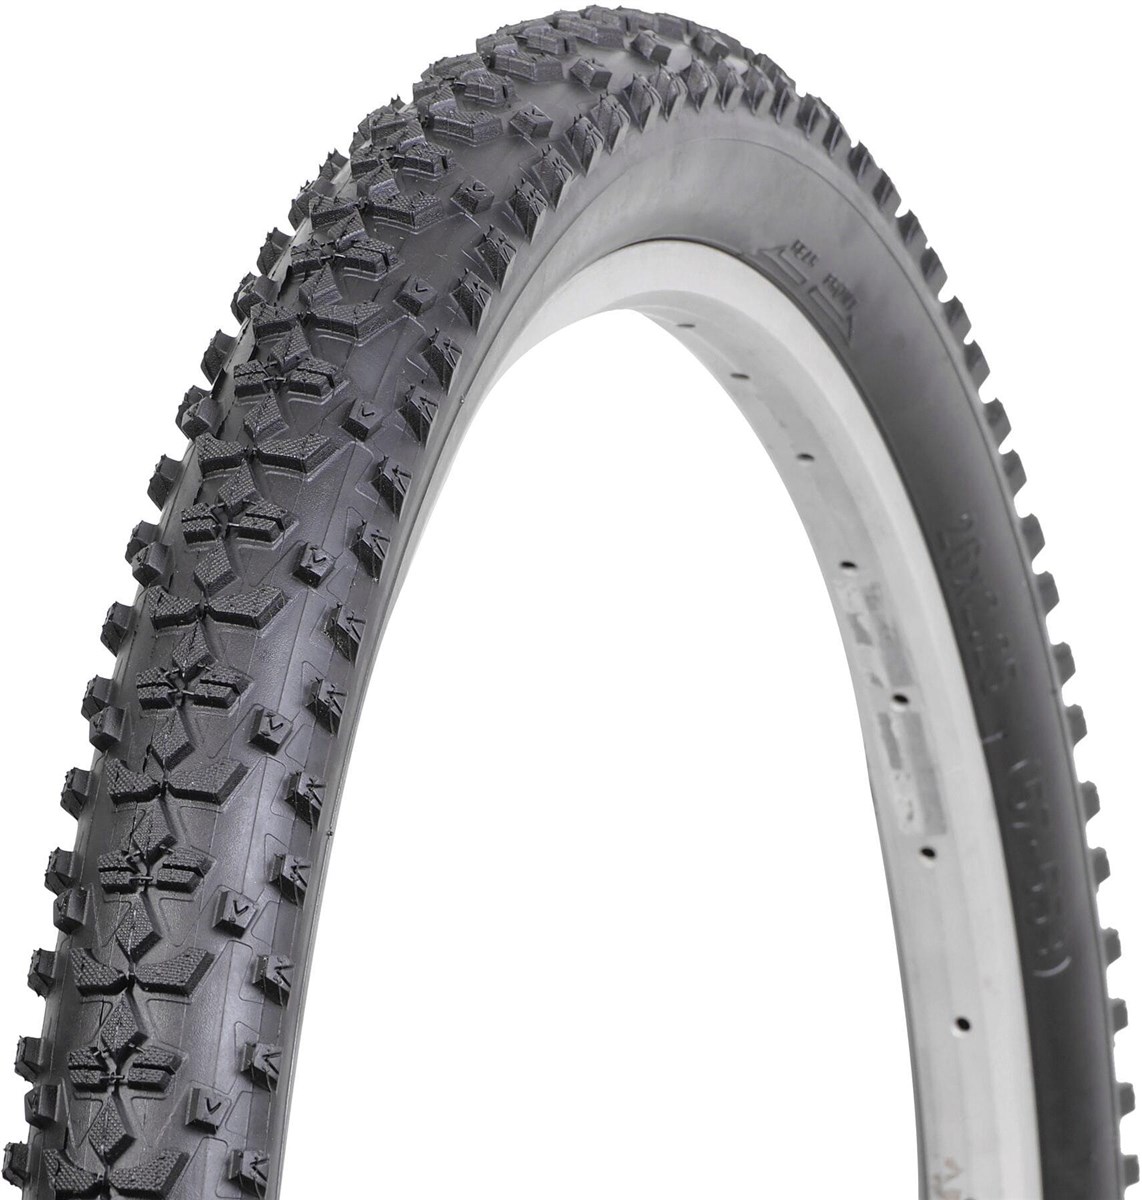 Nutrak Uproar 26" MTB Tyre product image